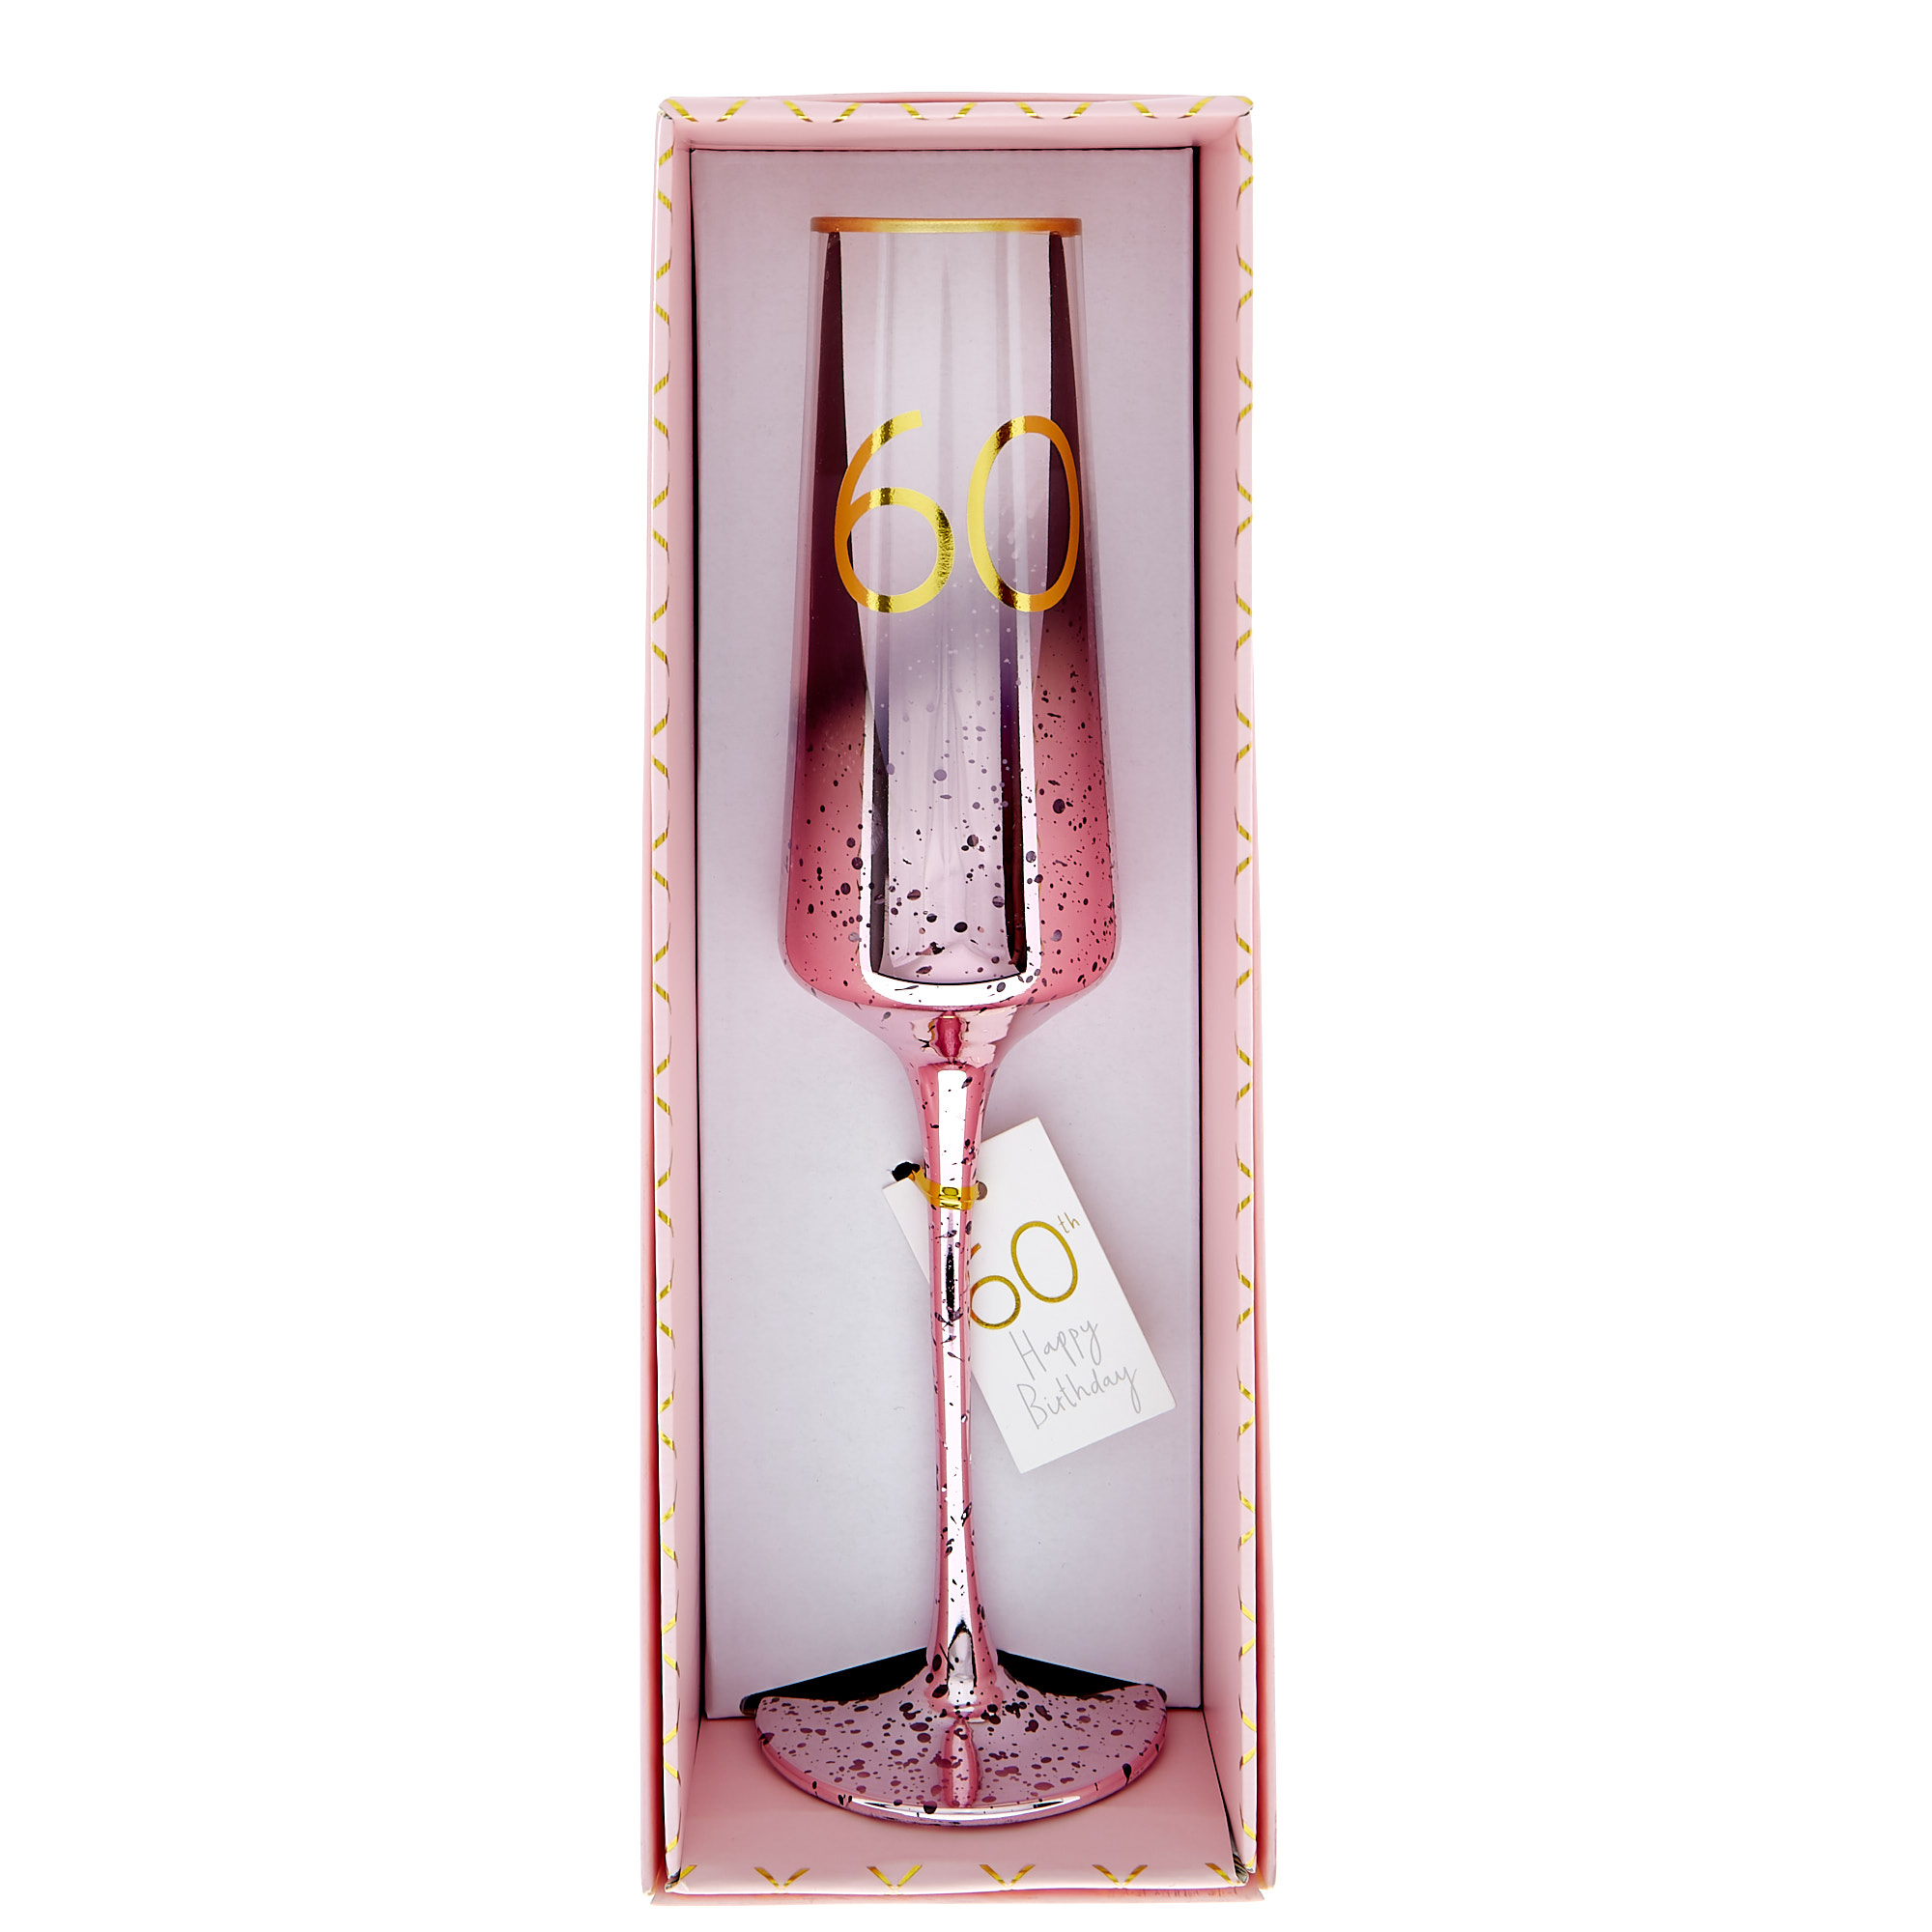 60th Birthday Champagne Flute - Happy Birthday To You